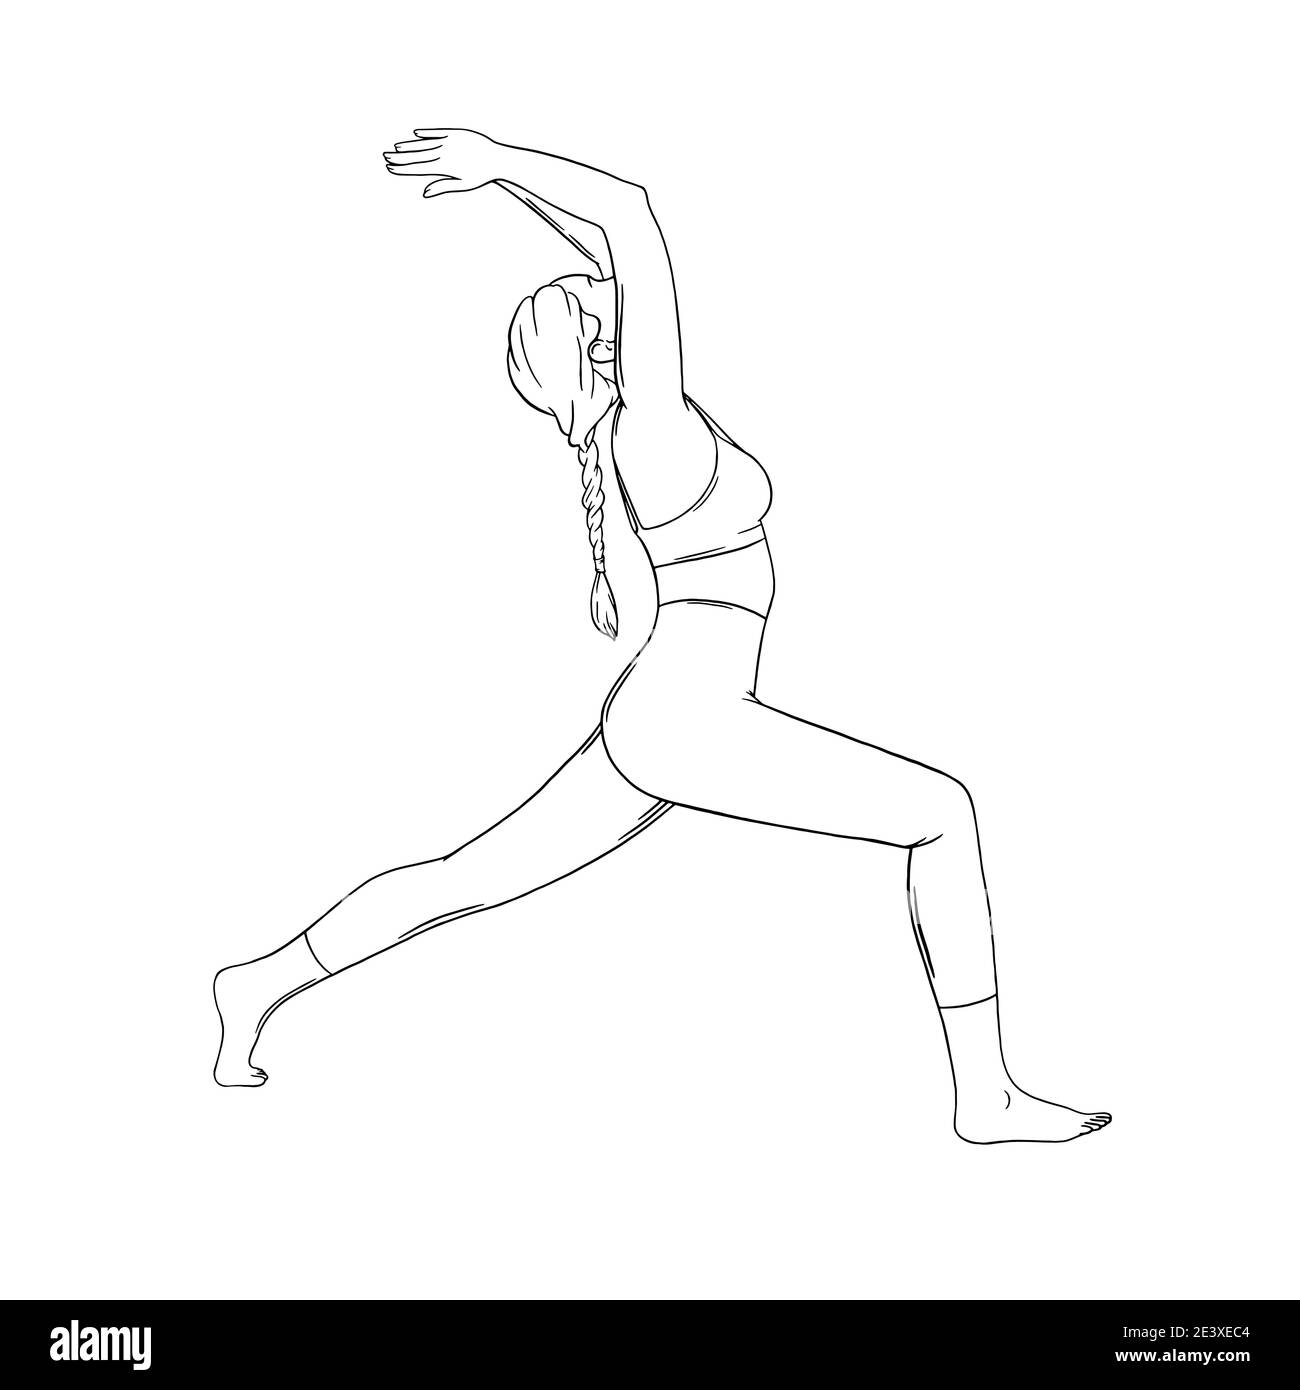 Yoga warrior pose or virabhadrasana. Woman practicing yoga pose. Engraved vector illustration isolated on white background Stock Vector